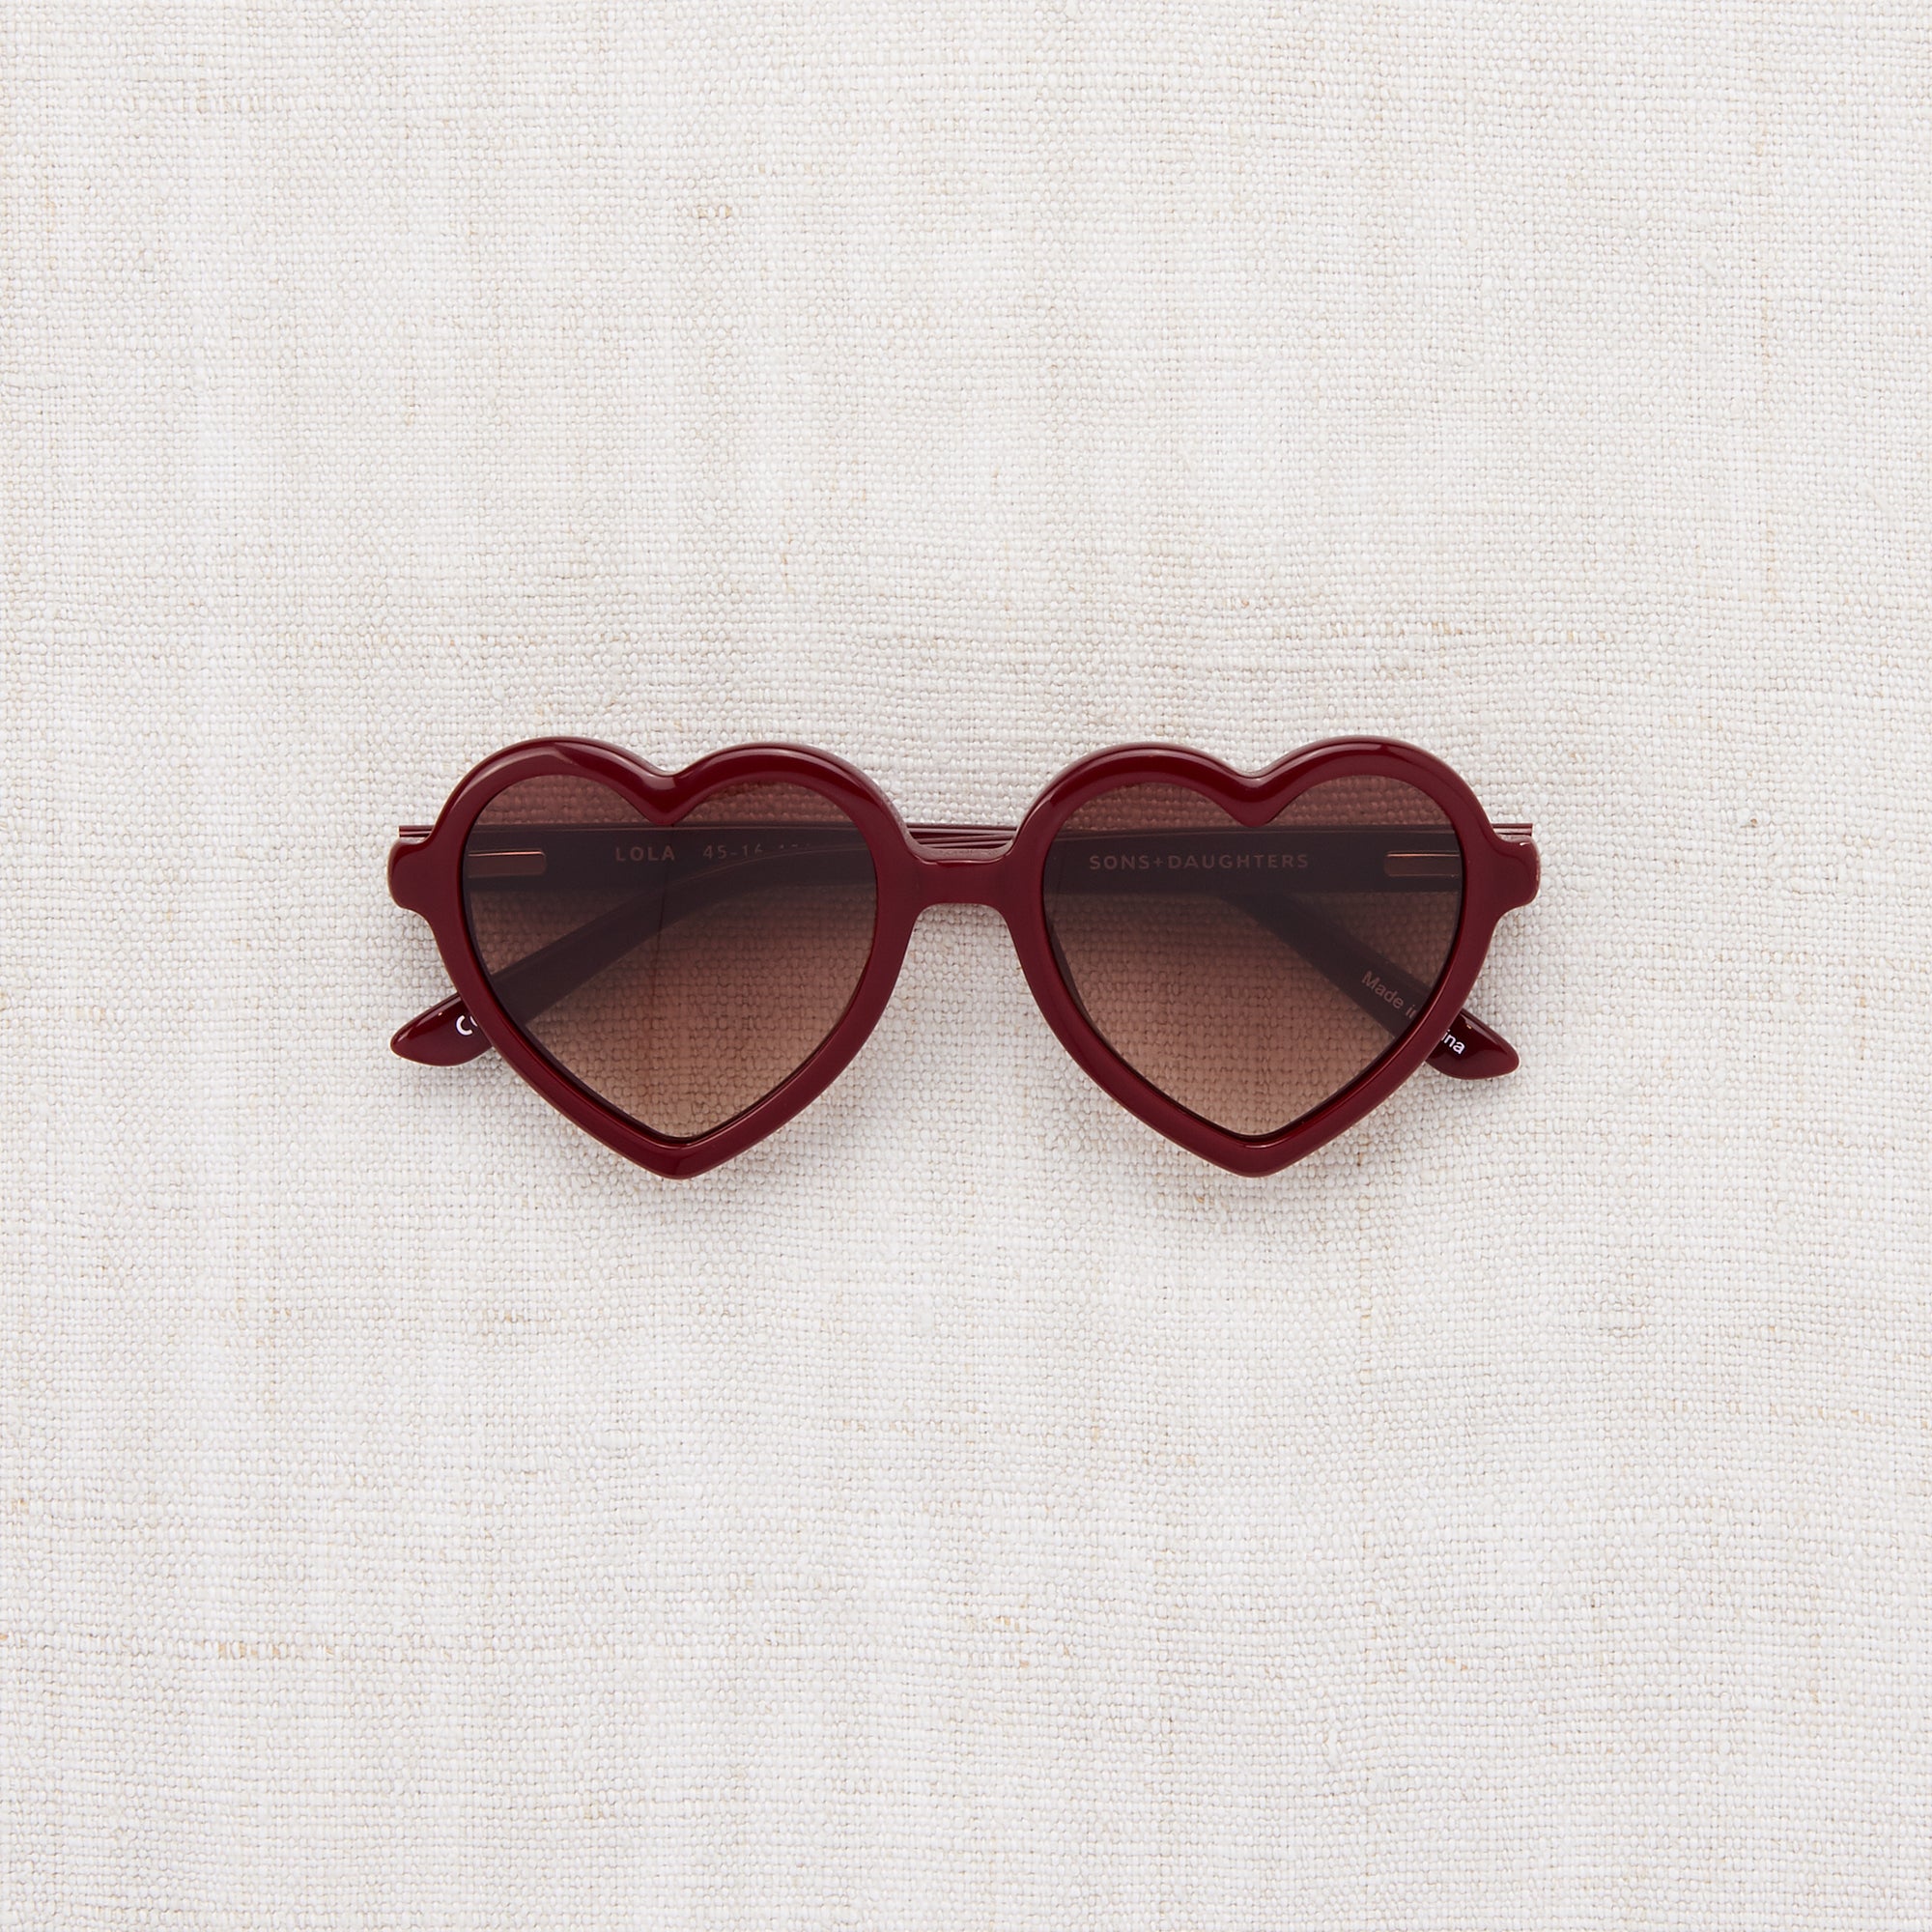 Lola Sunglasses - Bordeaux